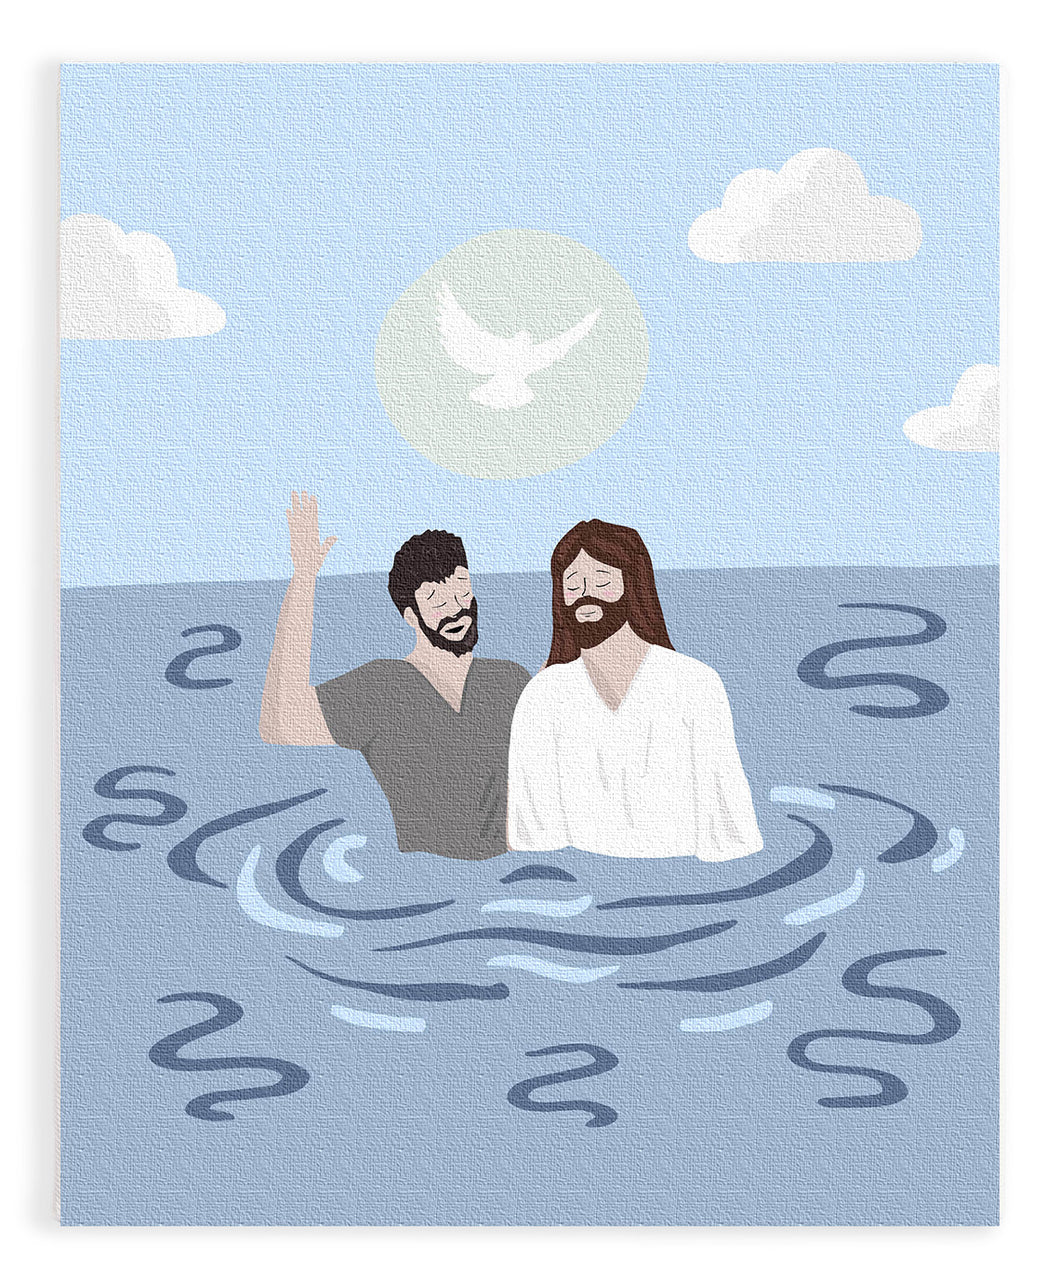 Christ's Baptism